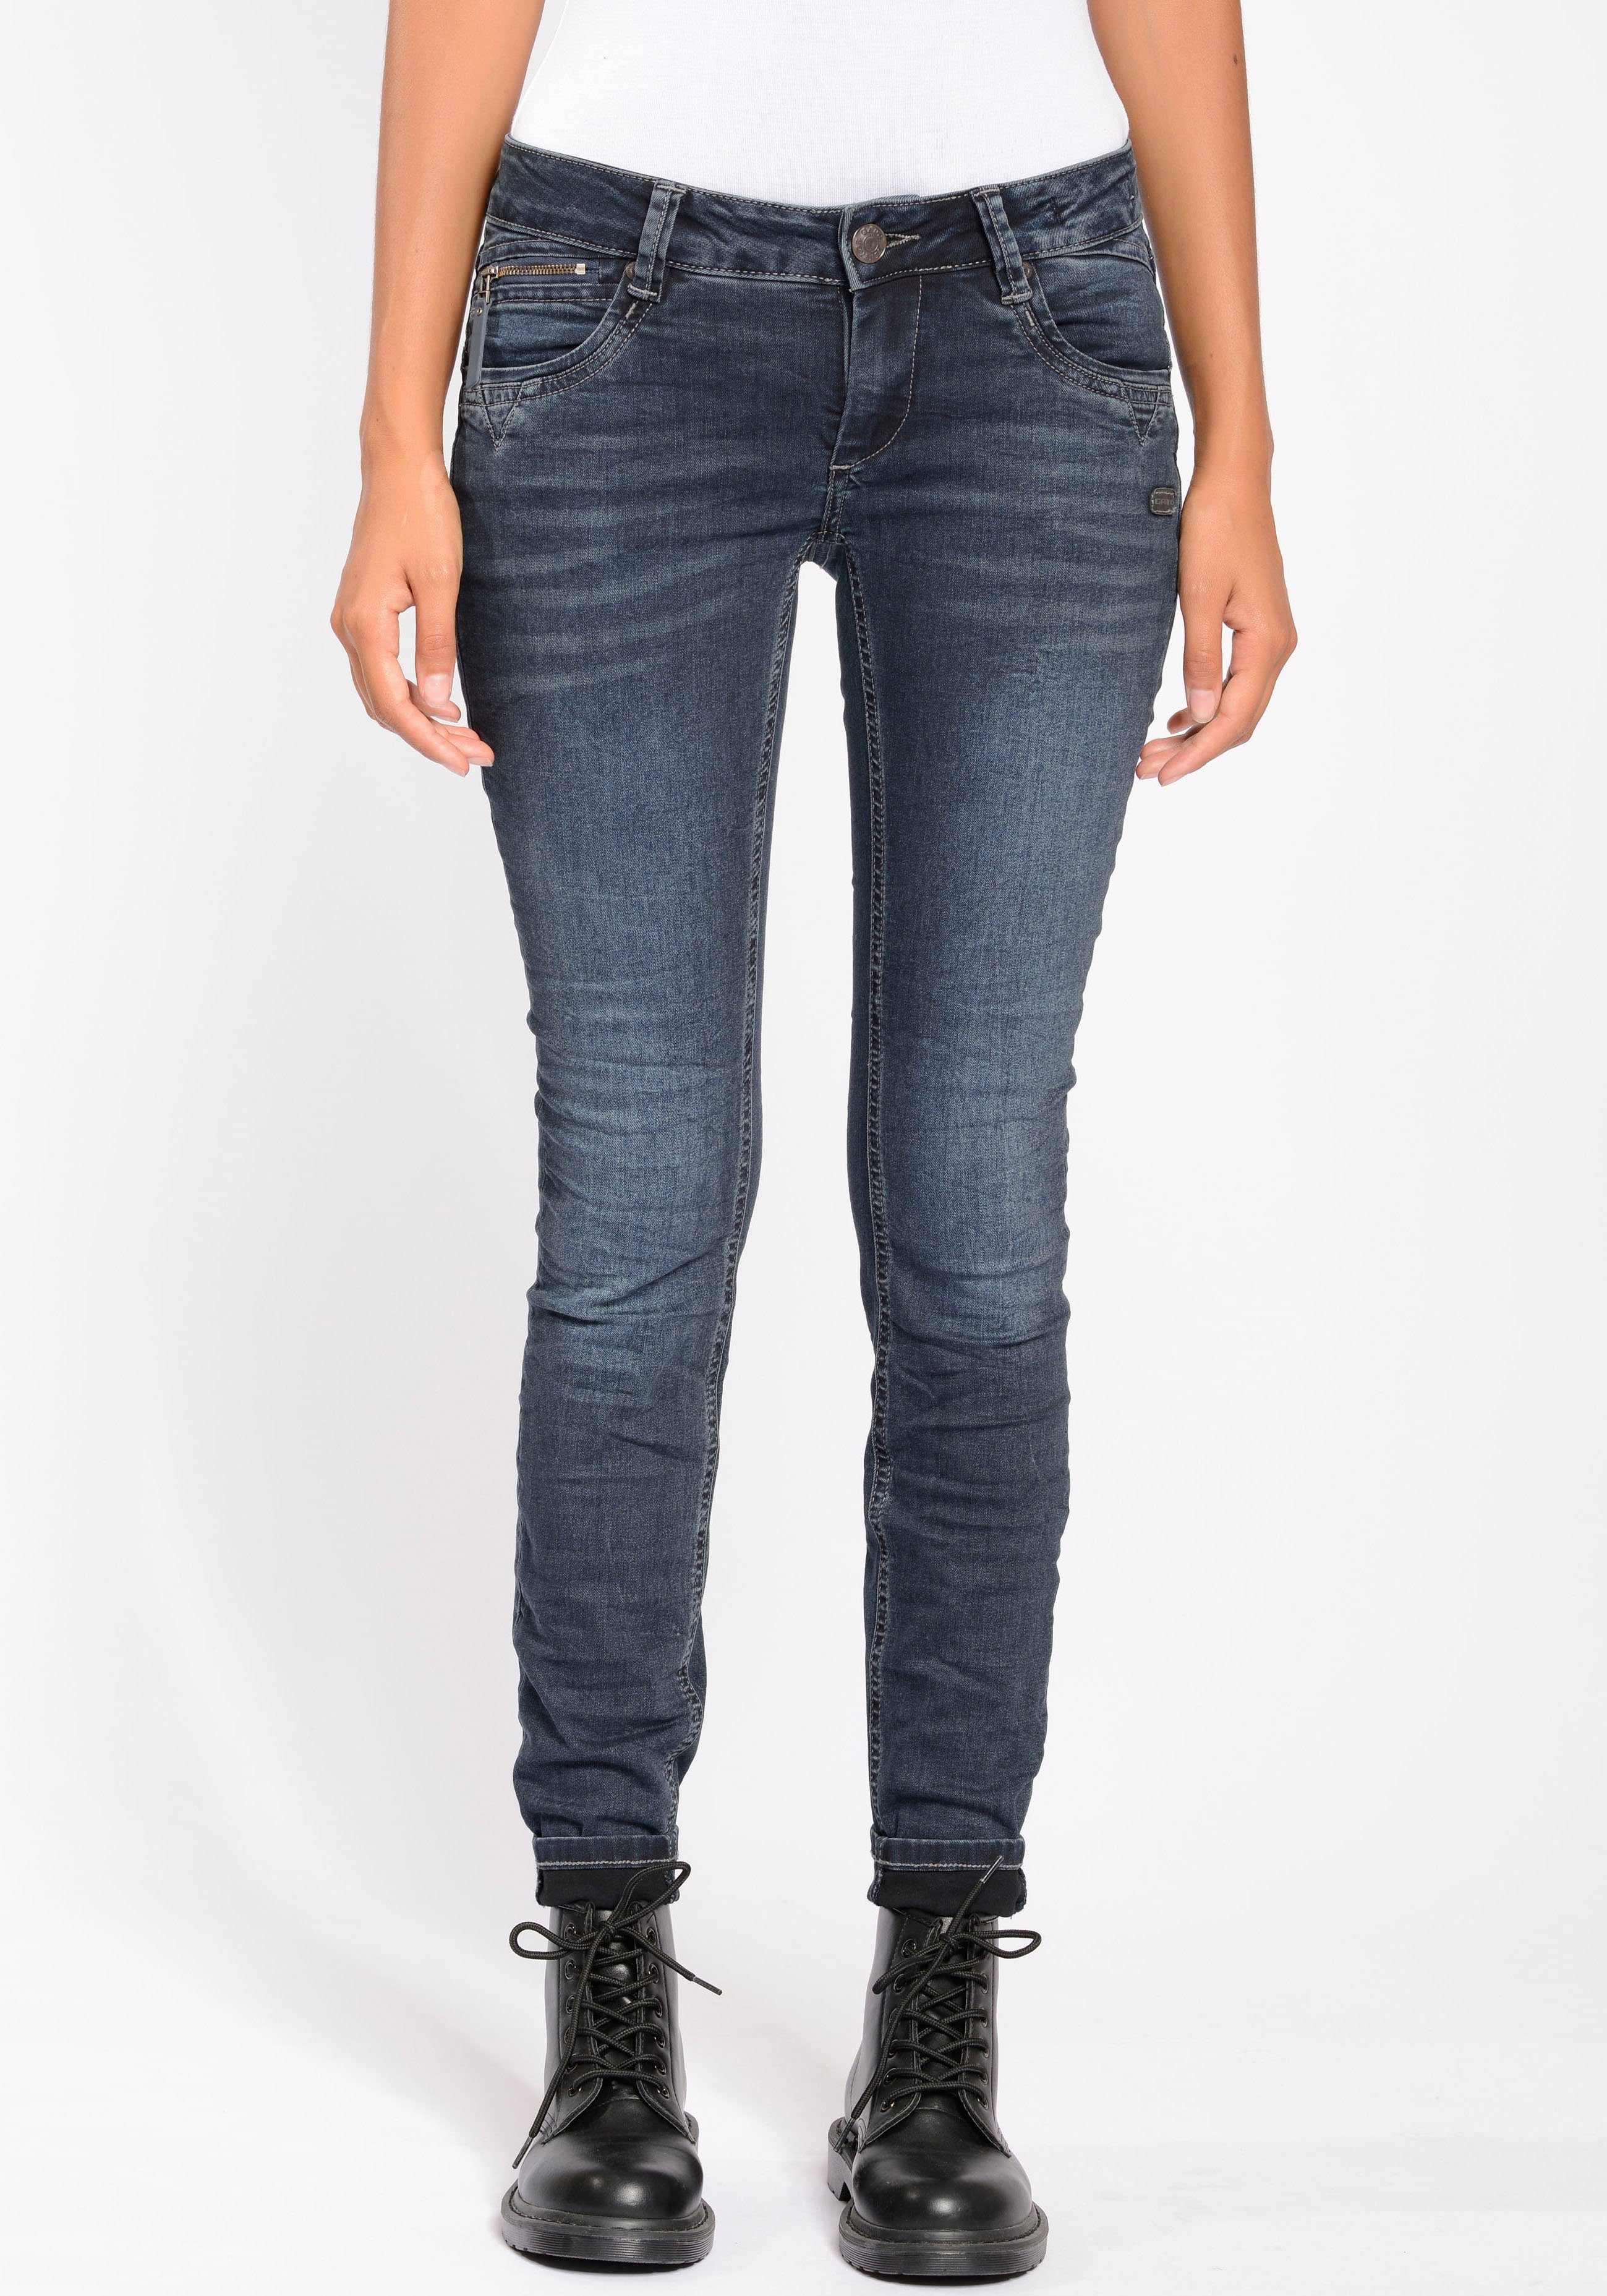 GANG Skinny-fit-Jeans 94Nikita mit Zipper-Detail an der Coinpocket, Enger  Skinny Fit mit etwas niedriger Leibhöhe